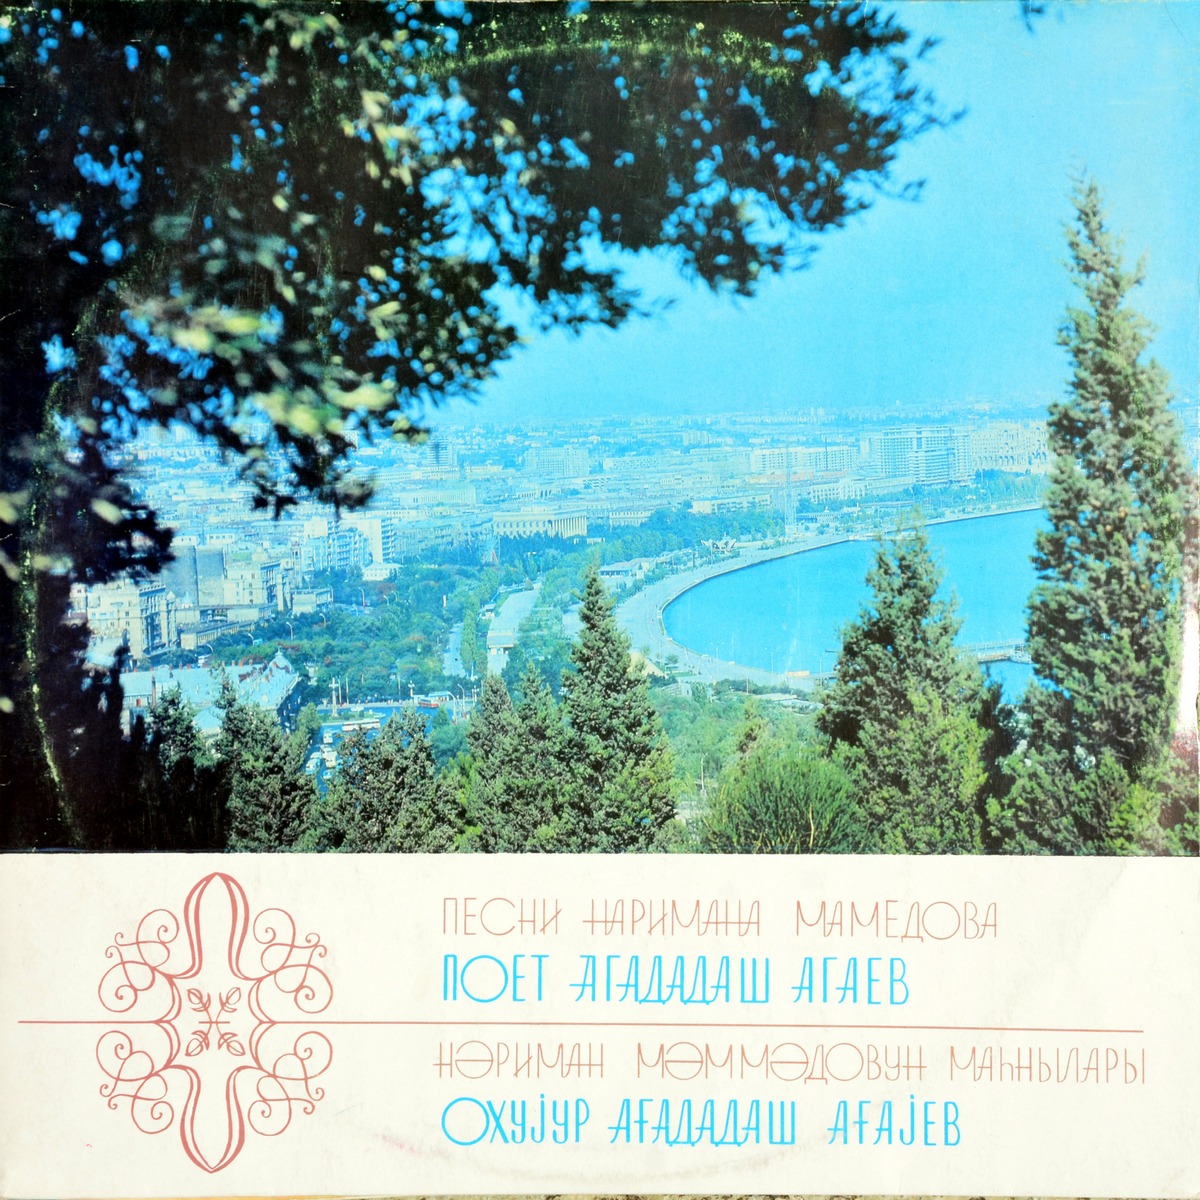 Агададаш АГАЕВ «Песни Наримана Мамедова» — на азербайджанском языке